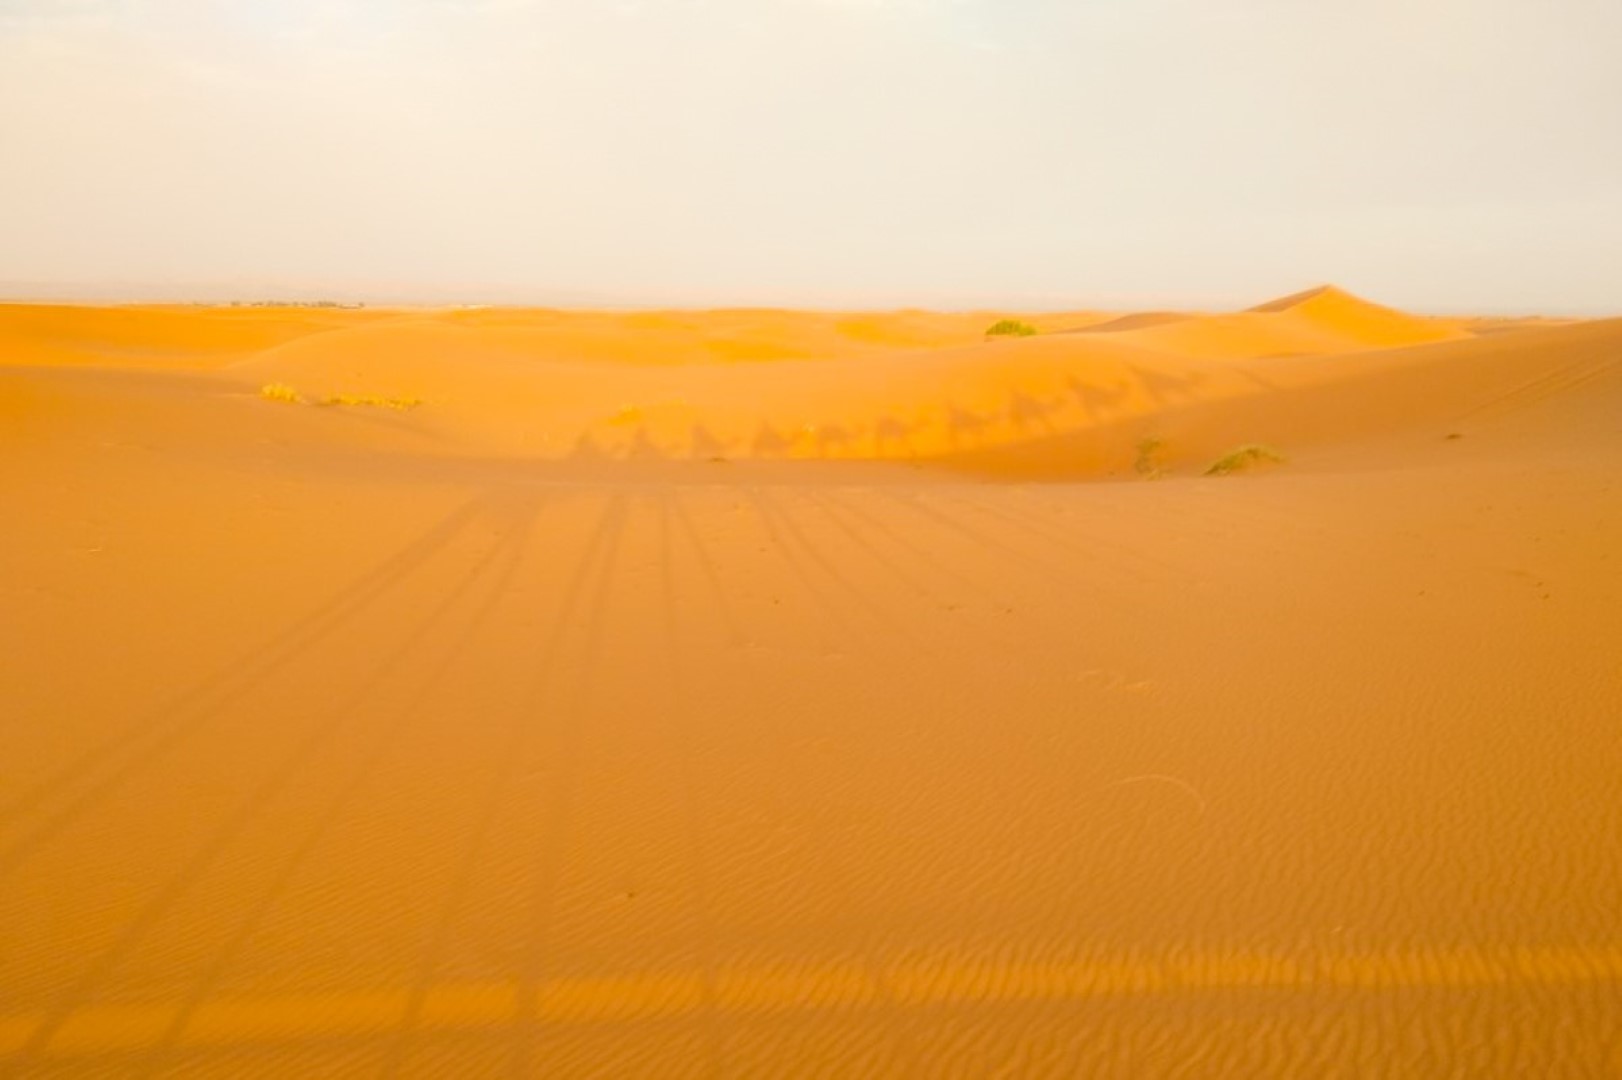 Deserto do Saara, em Marrocos